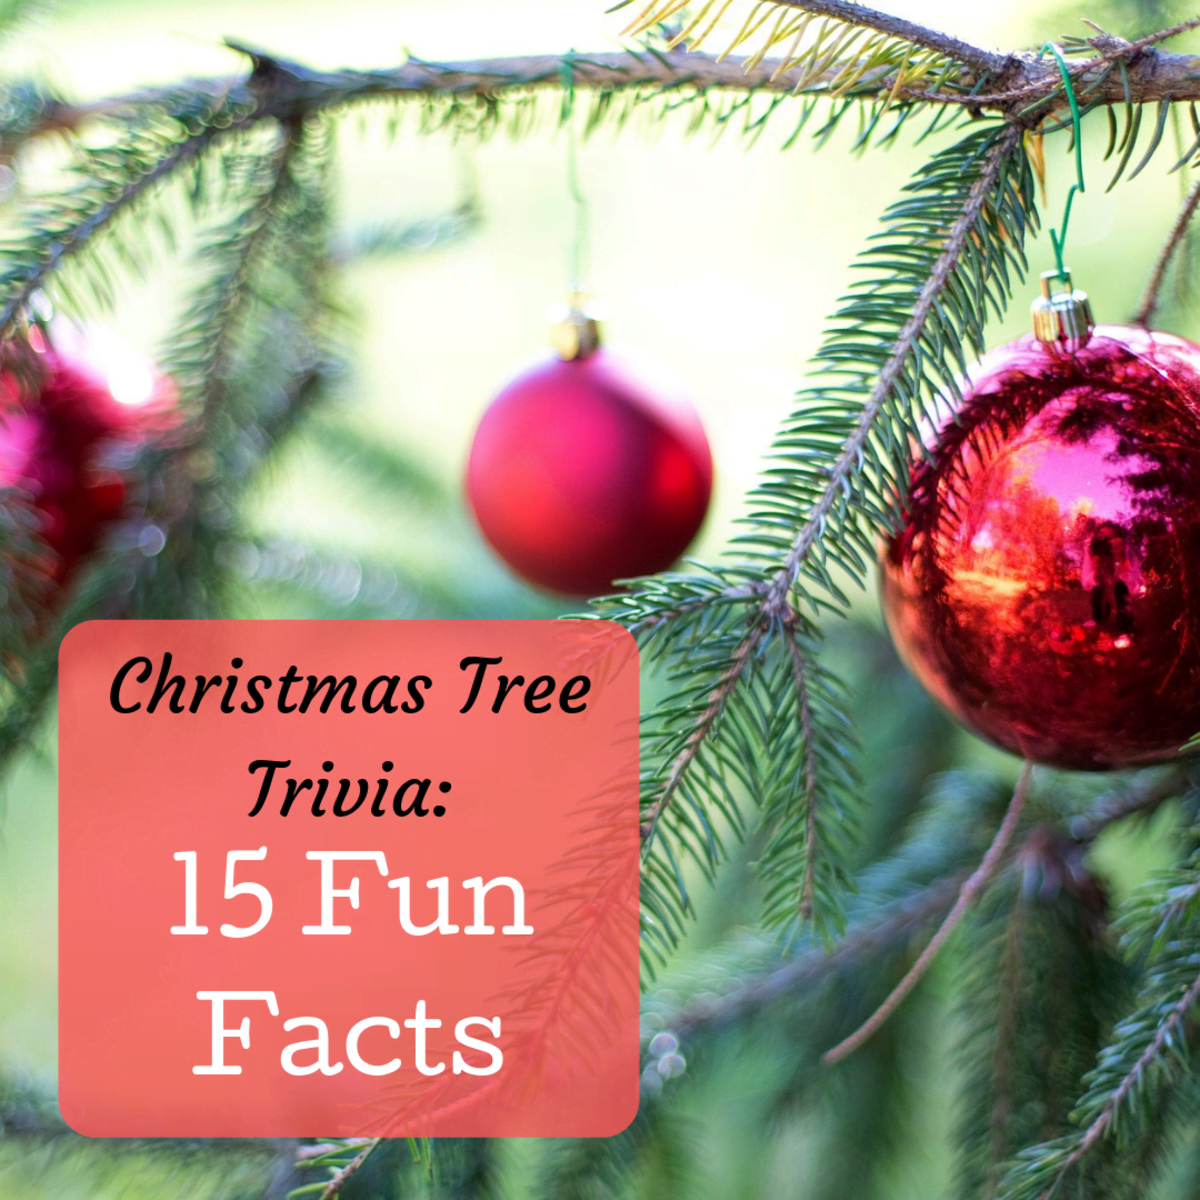 Christmas Trees - Symbolism, Traditions & Trivia